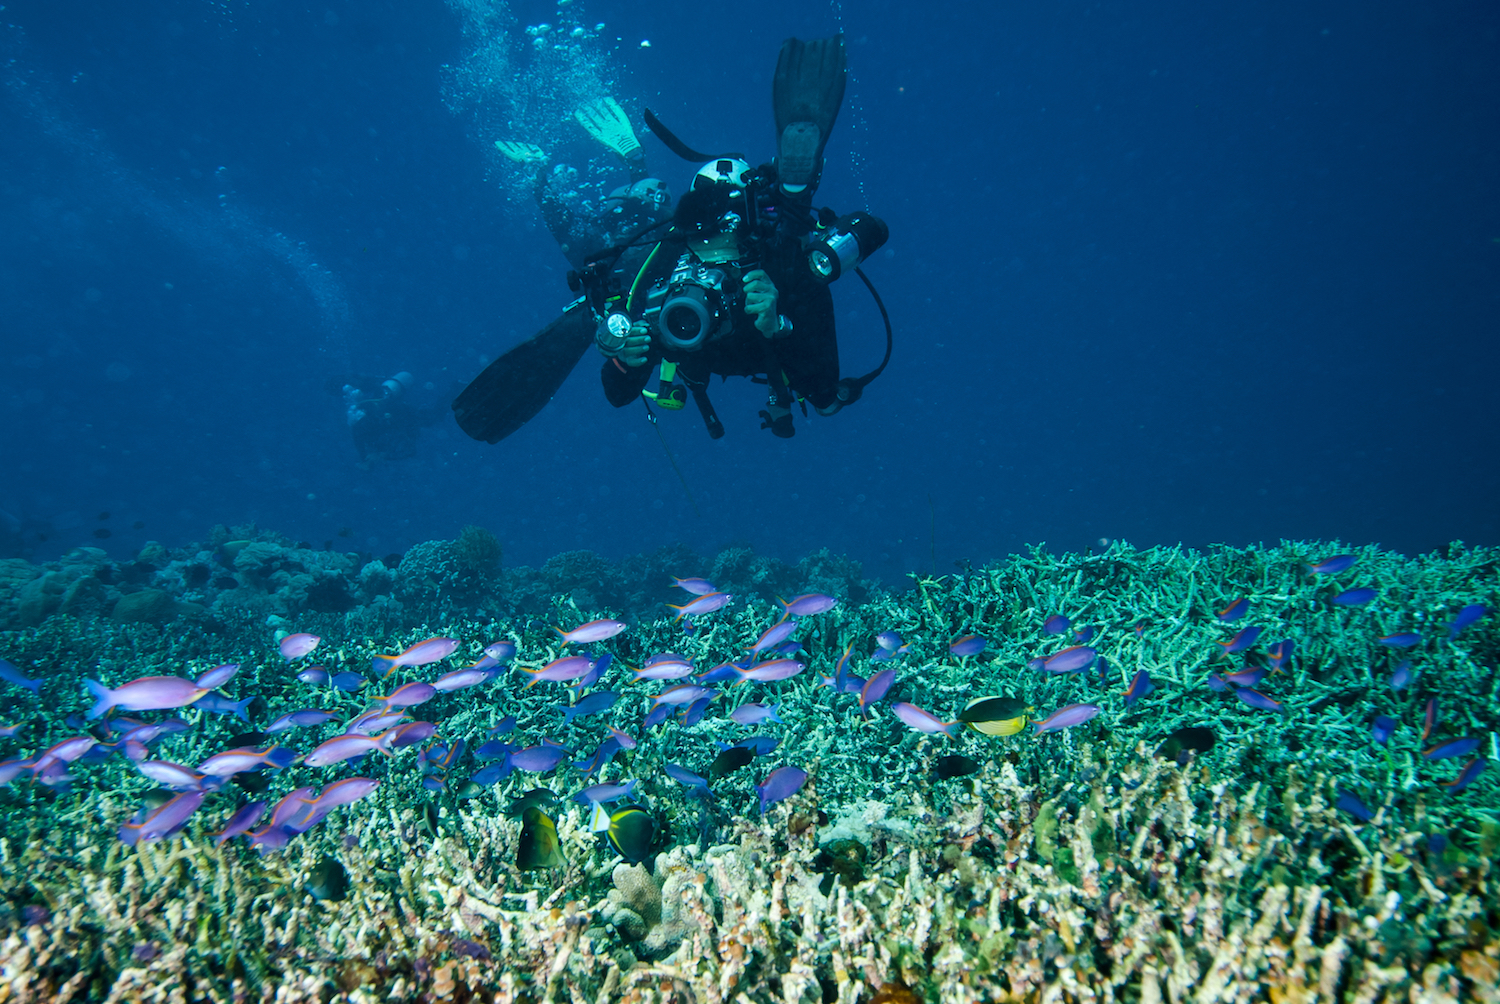 5 Best Underwater Photography Tips